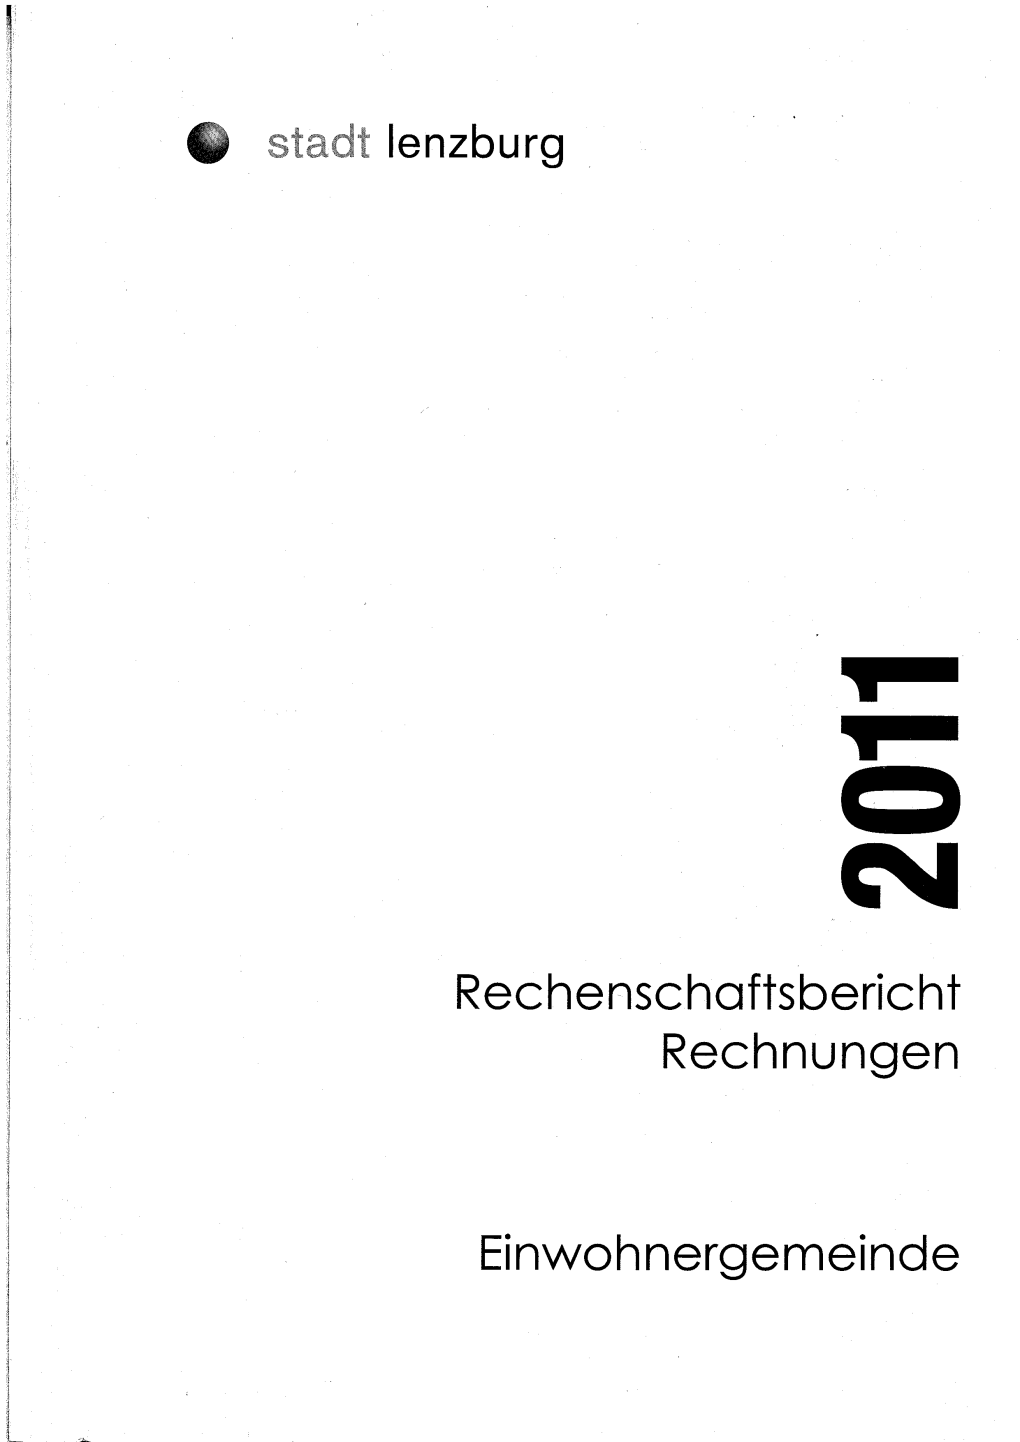 Rechenschaftsberichtewg2011.Pdf